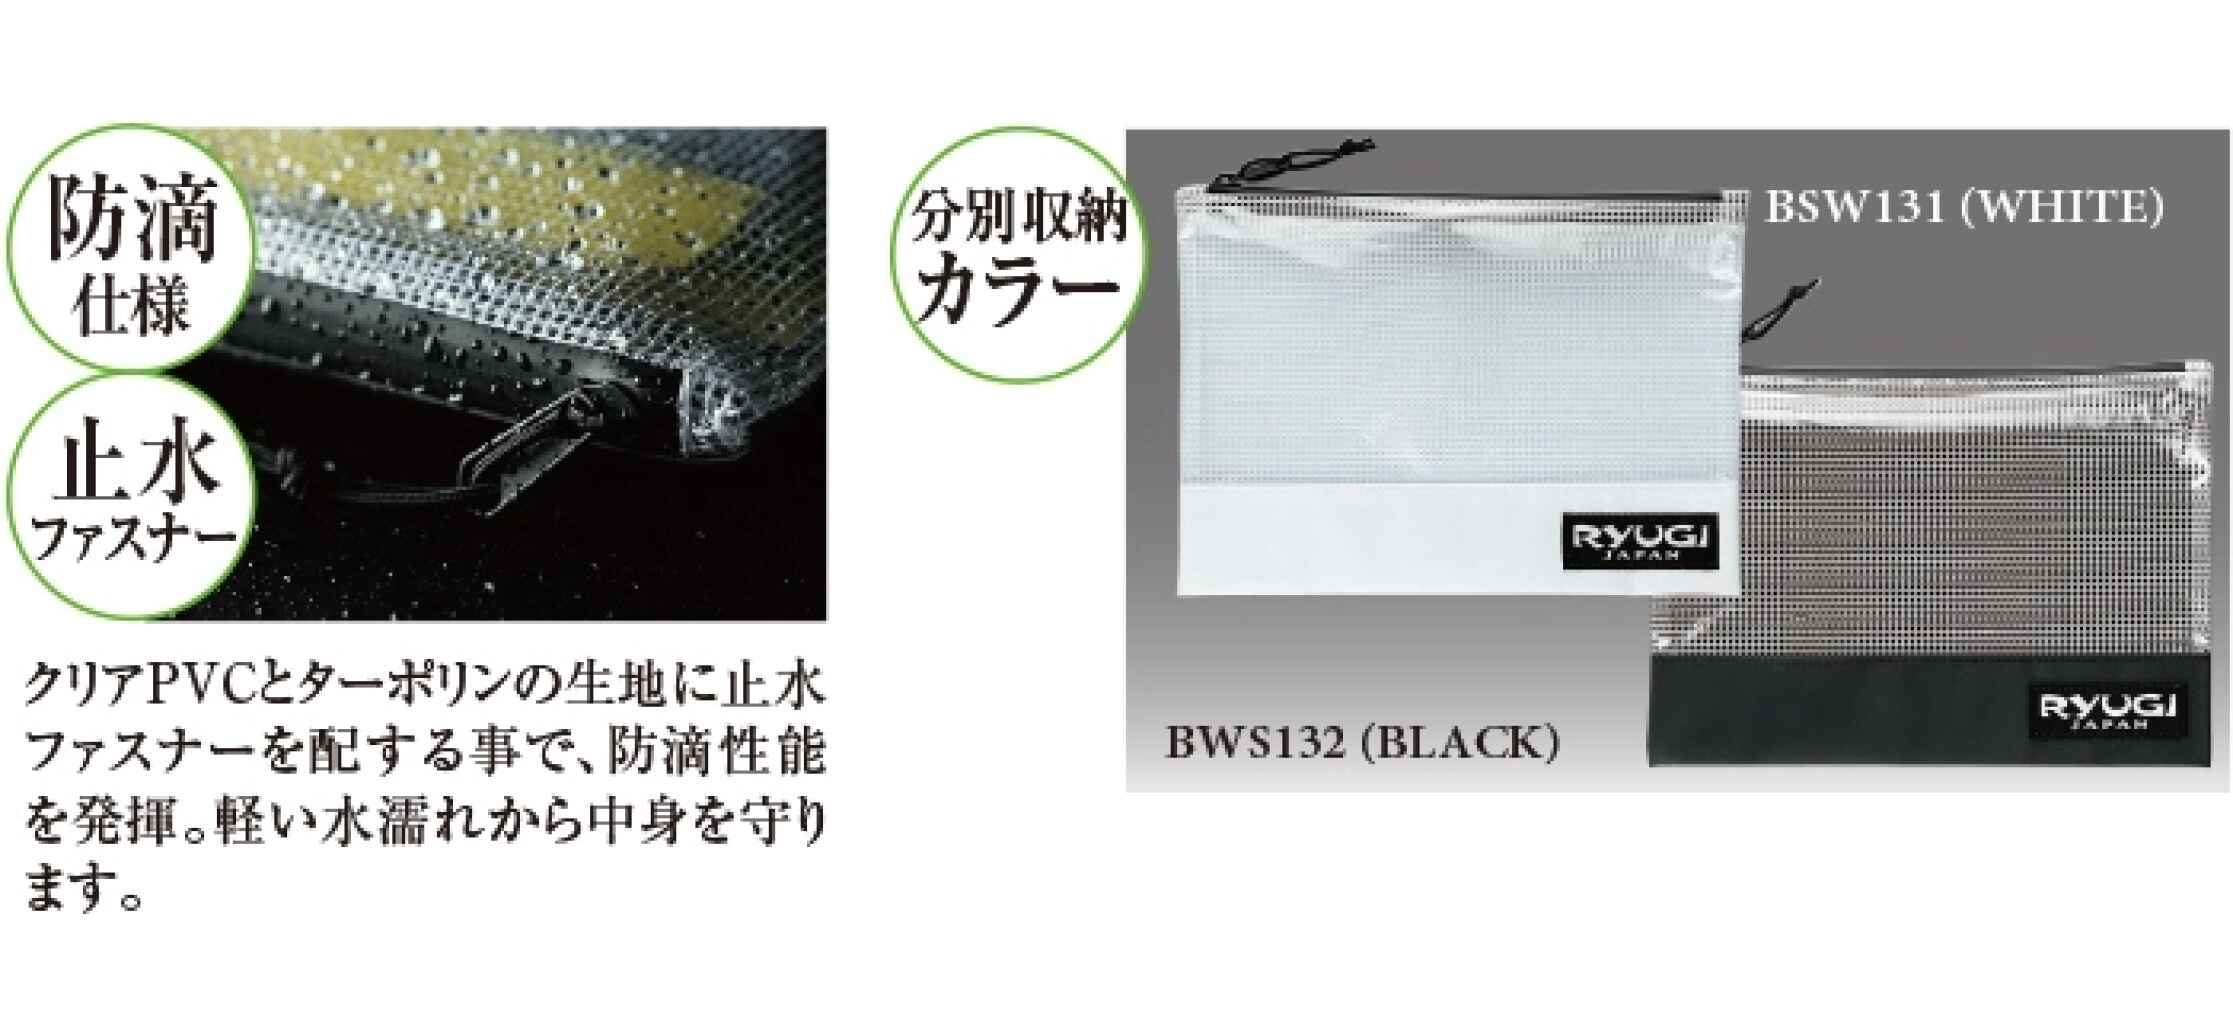 Ryugi Worm Stocker L Black